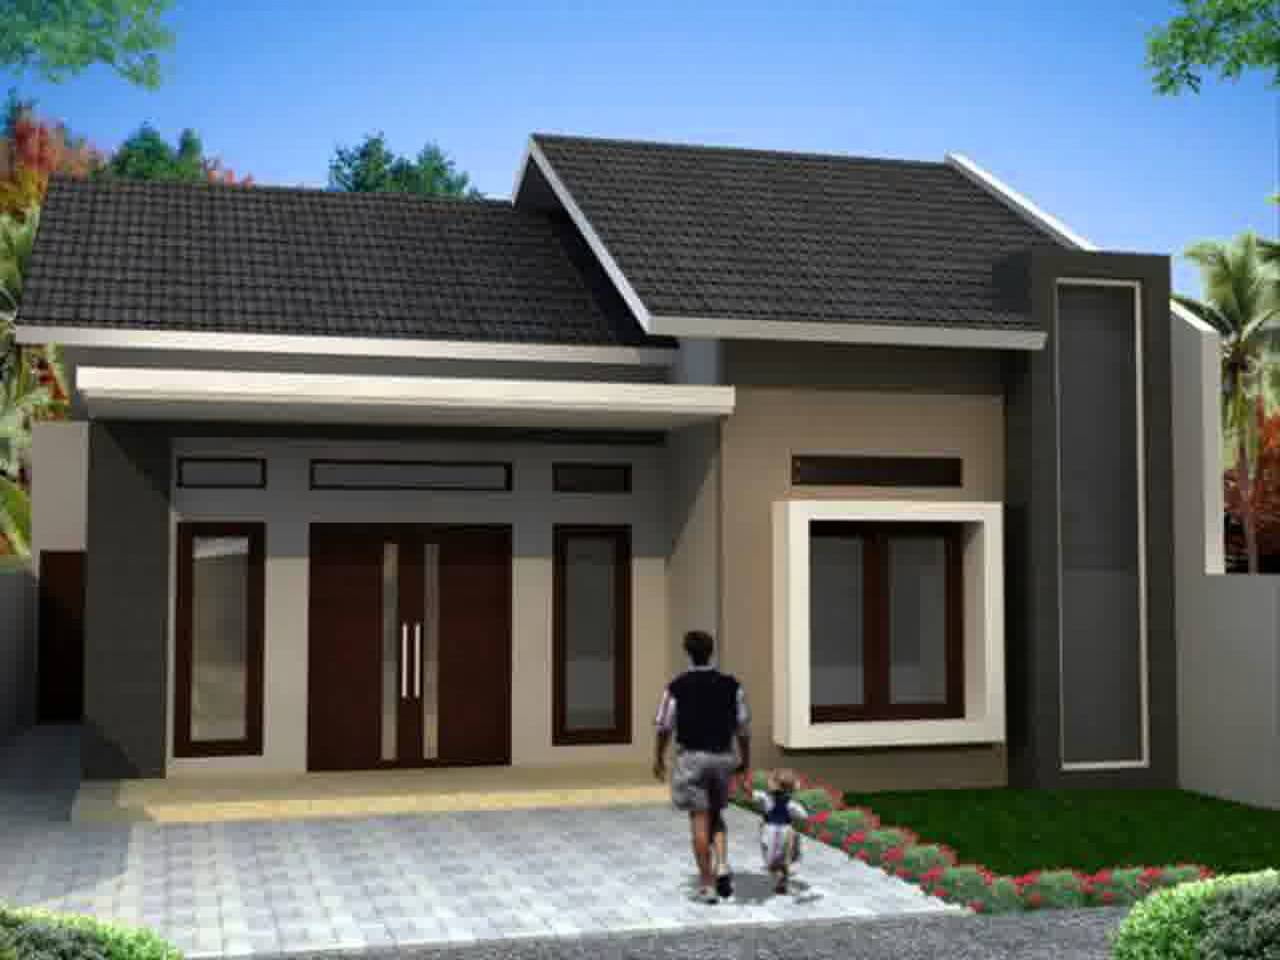 77 Arsitektur Desain Rumah Minimalis Harga 100 Juta Paling Terkenal ...